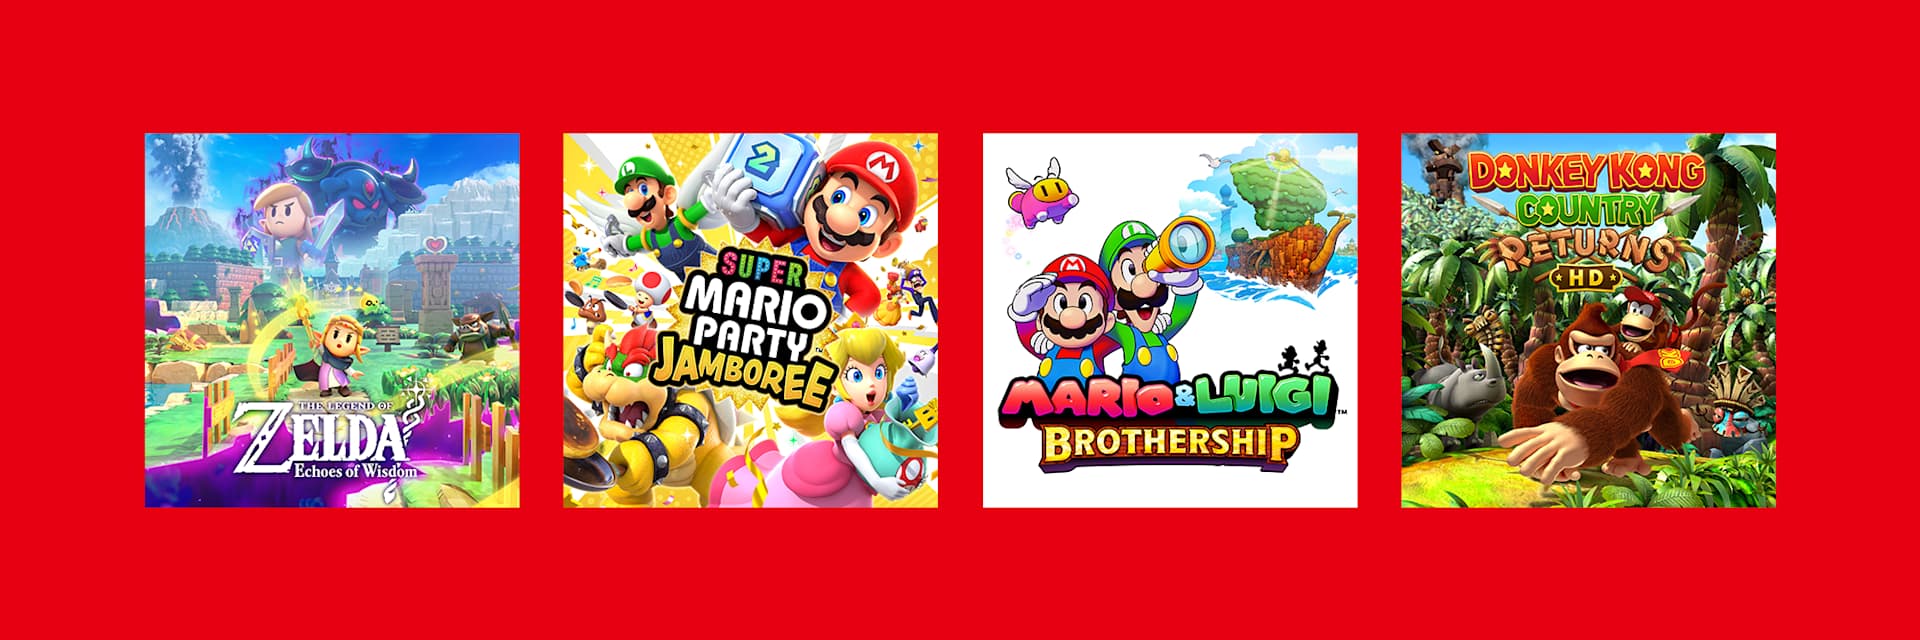 Nintendo Direct - Game Pre-orders